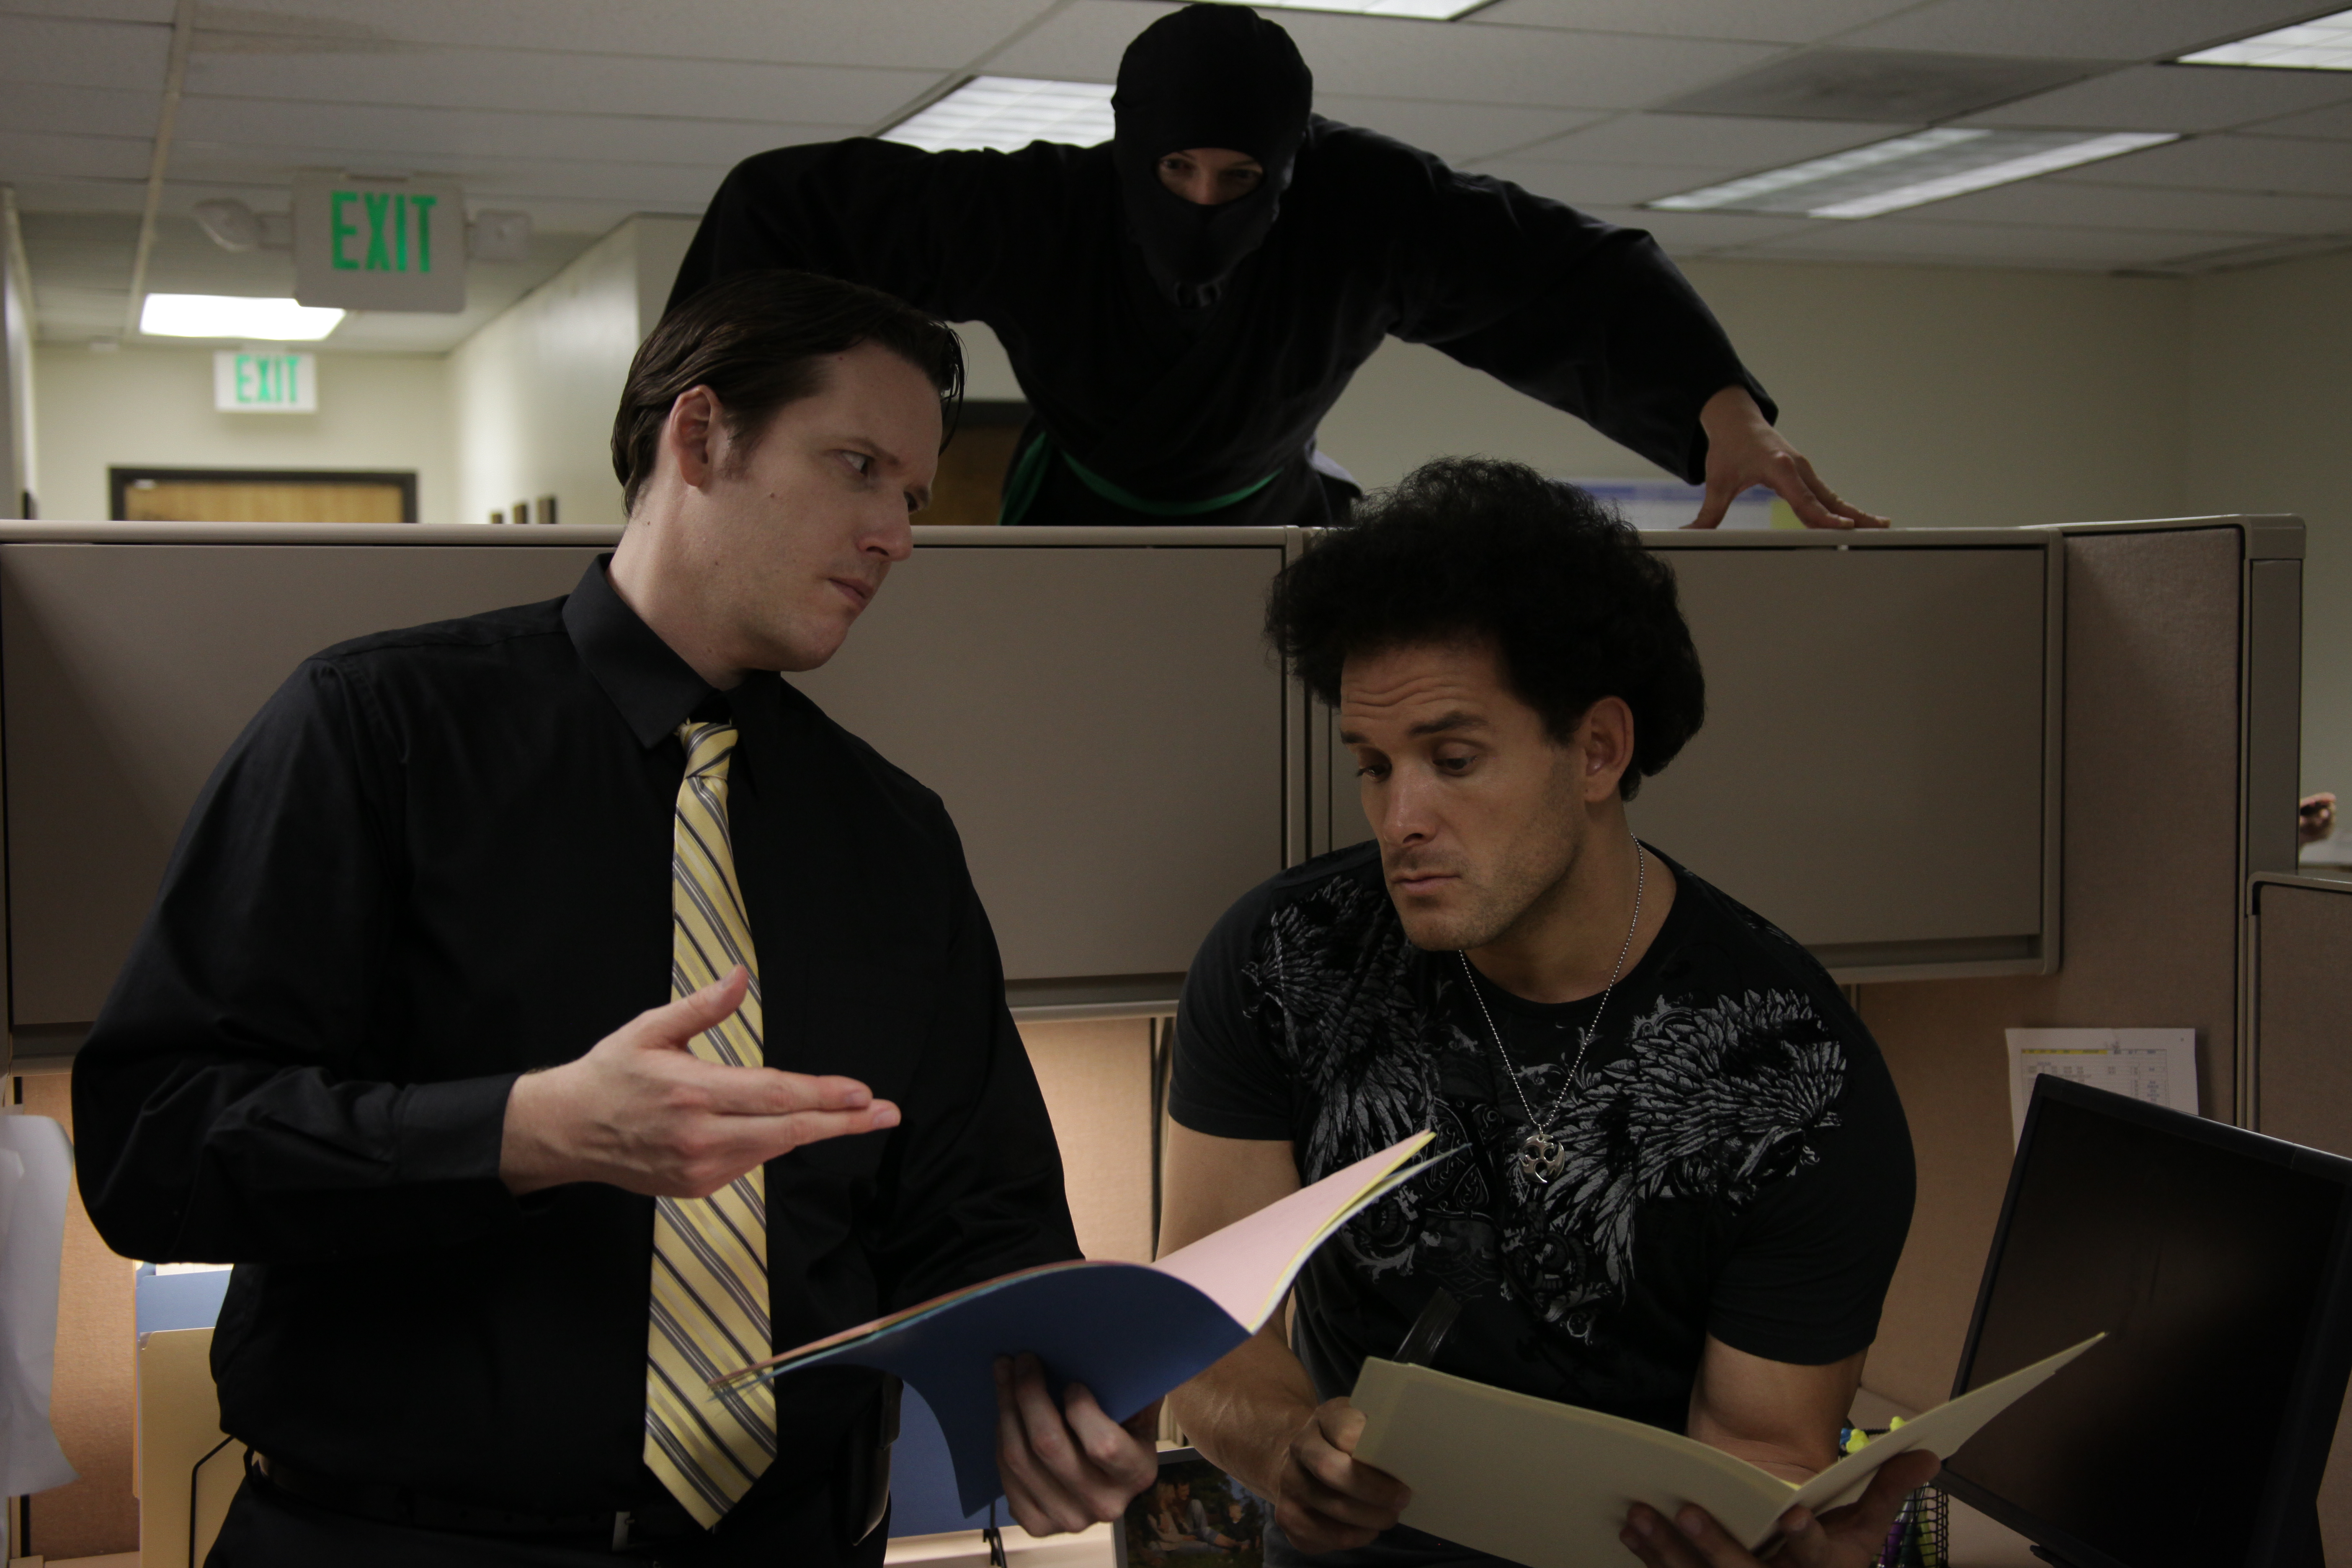 Jade Carter, Jose Rosete, and Robb Padgett on set of Office Ninja.